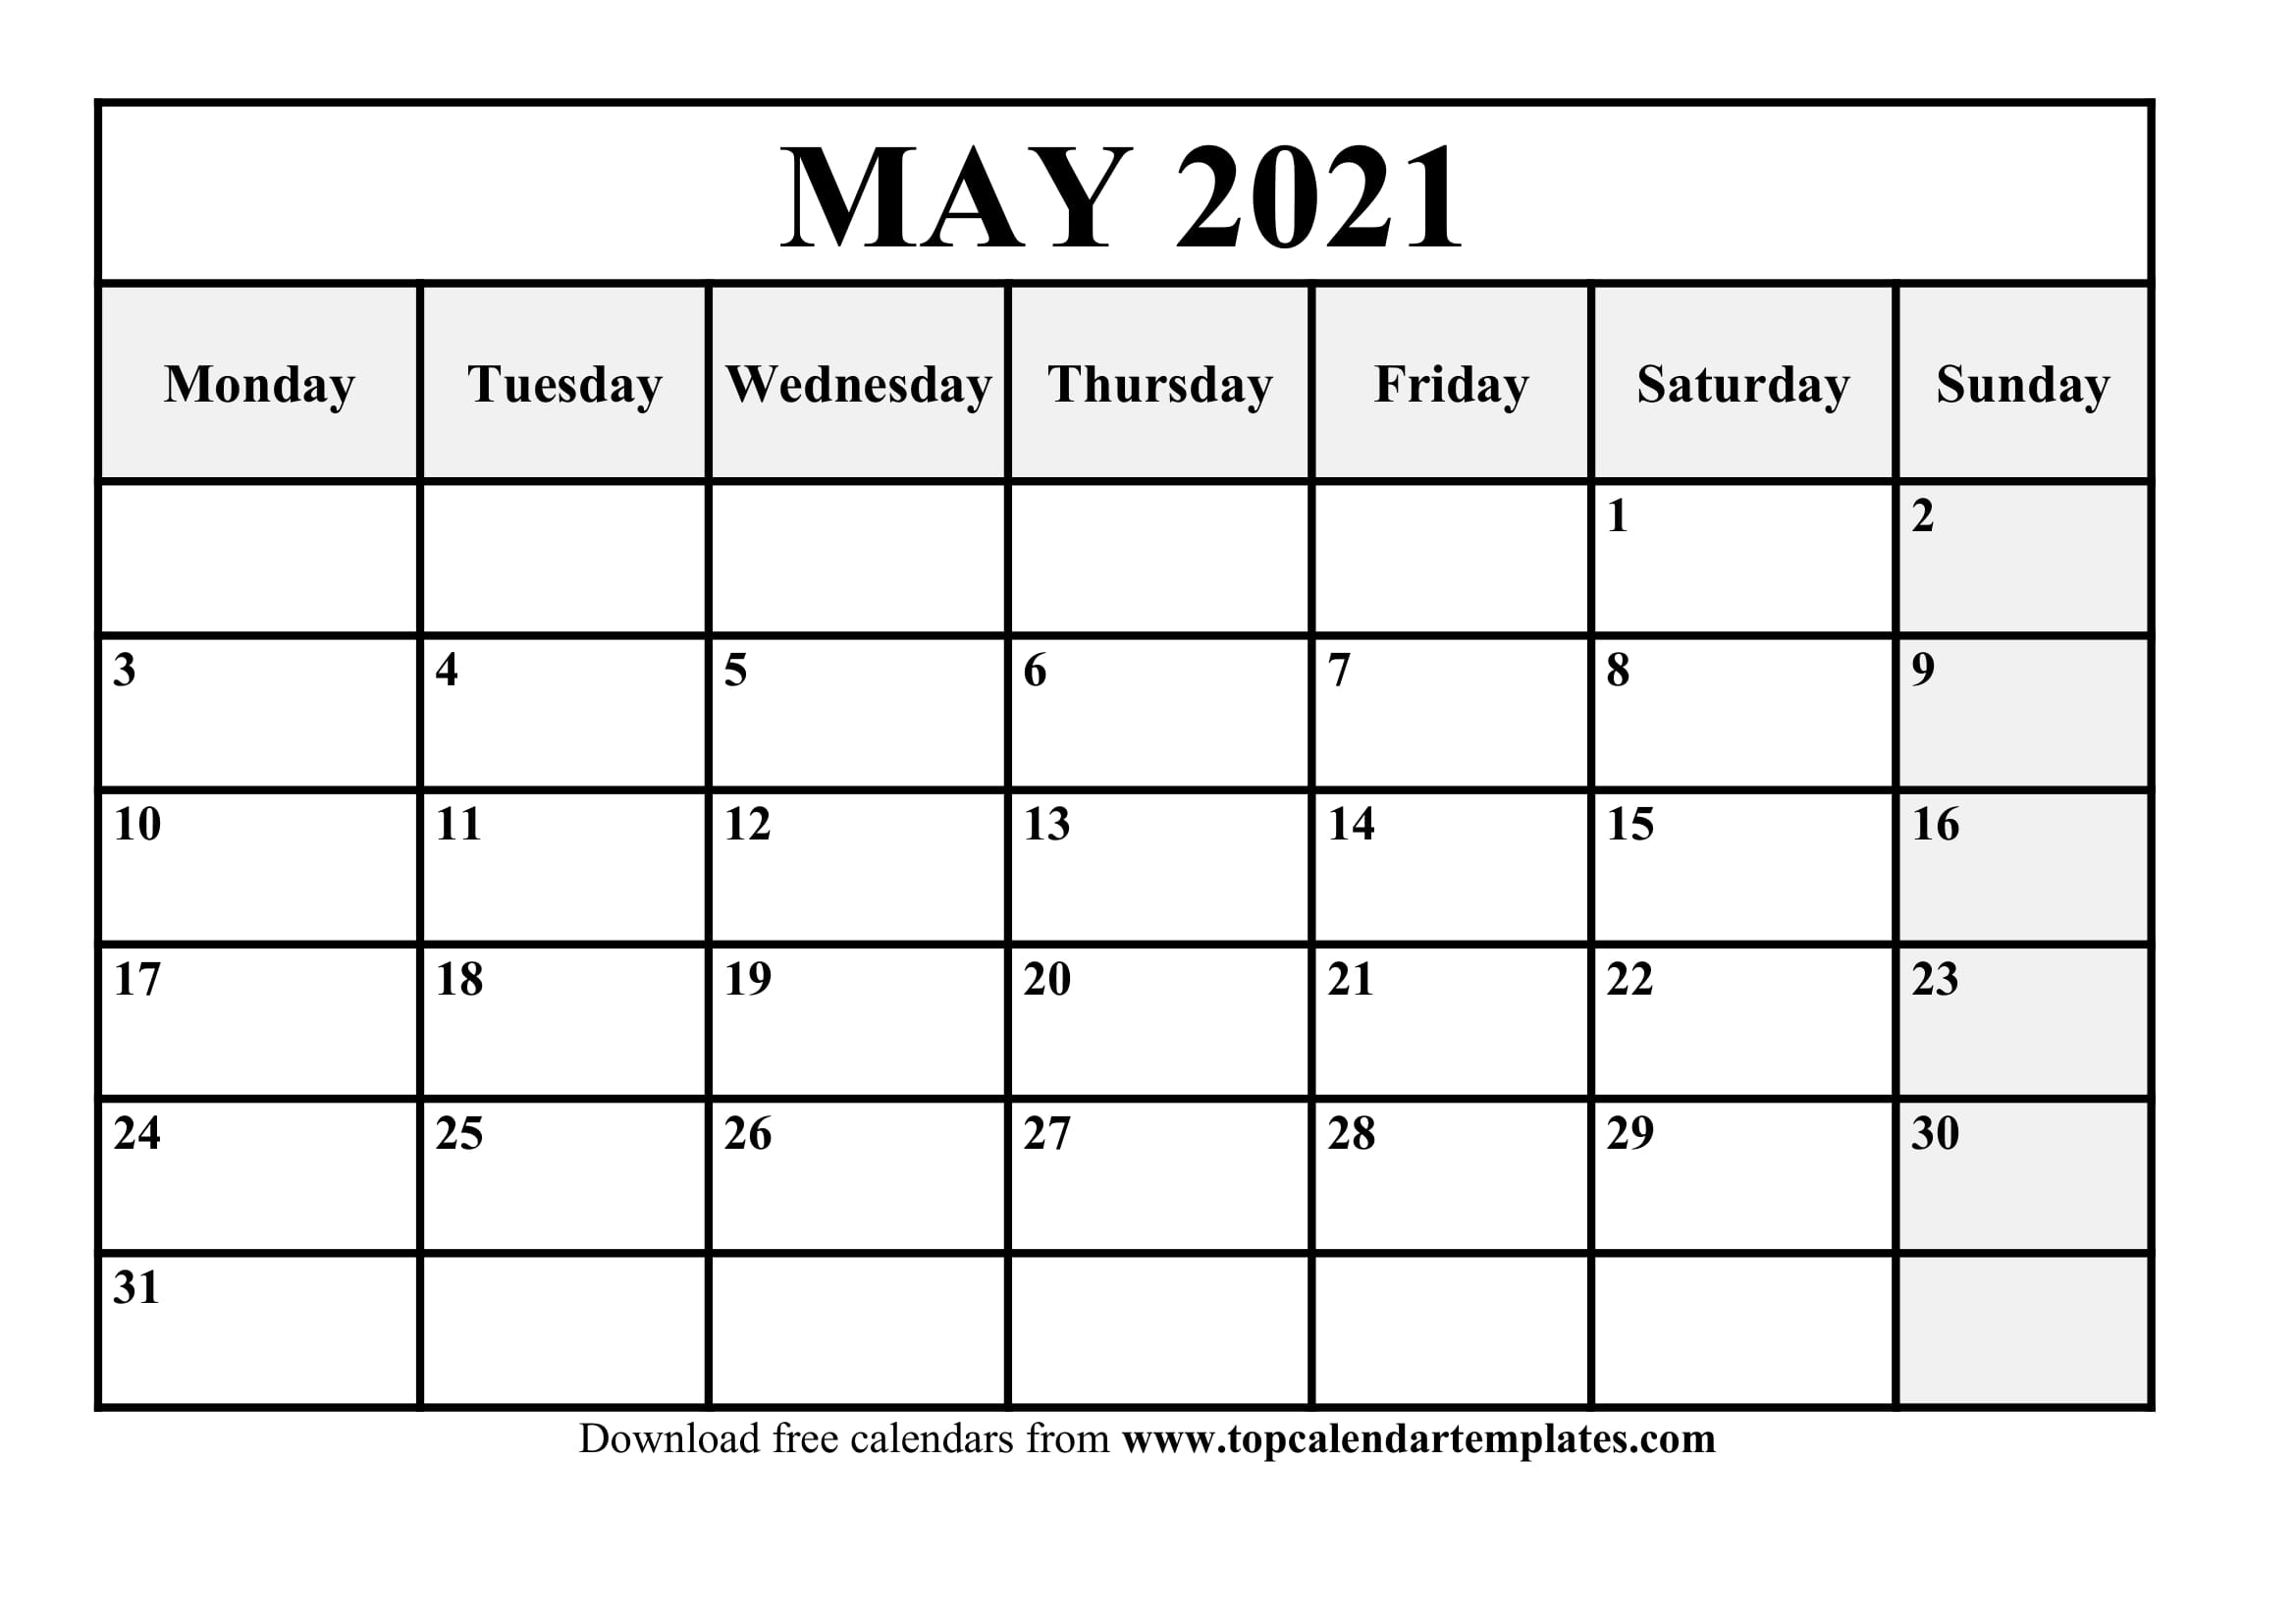 Free May 2021 Printable Calendar In Editable Format